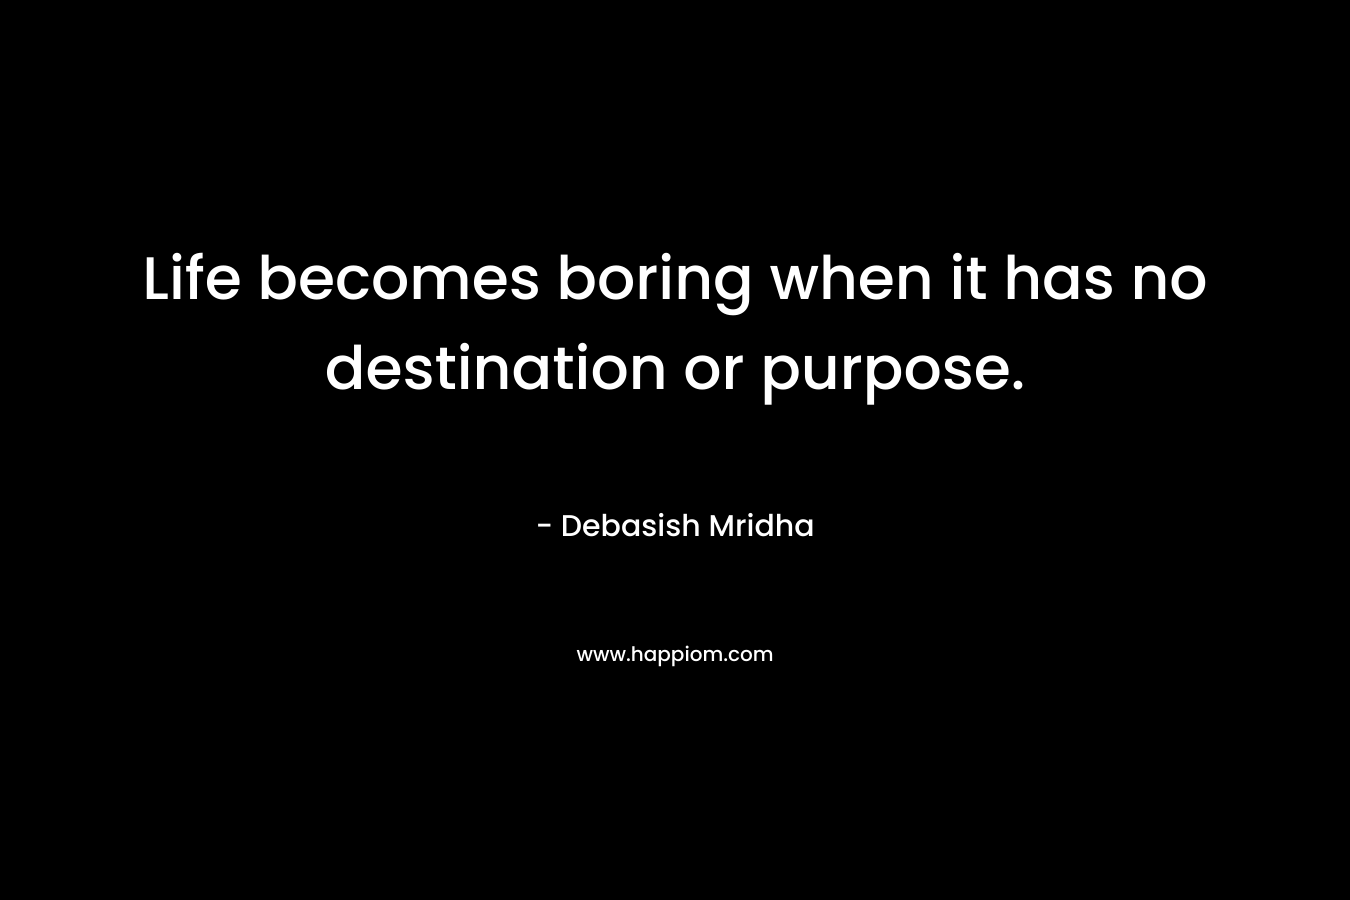 Life becomes boring when it has no destination or purpose.